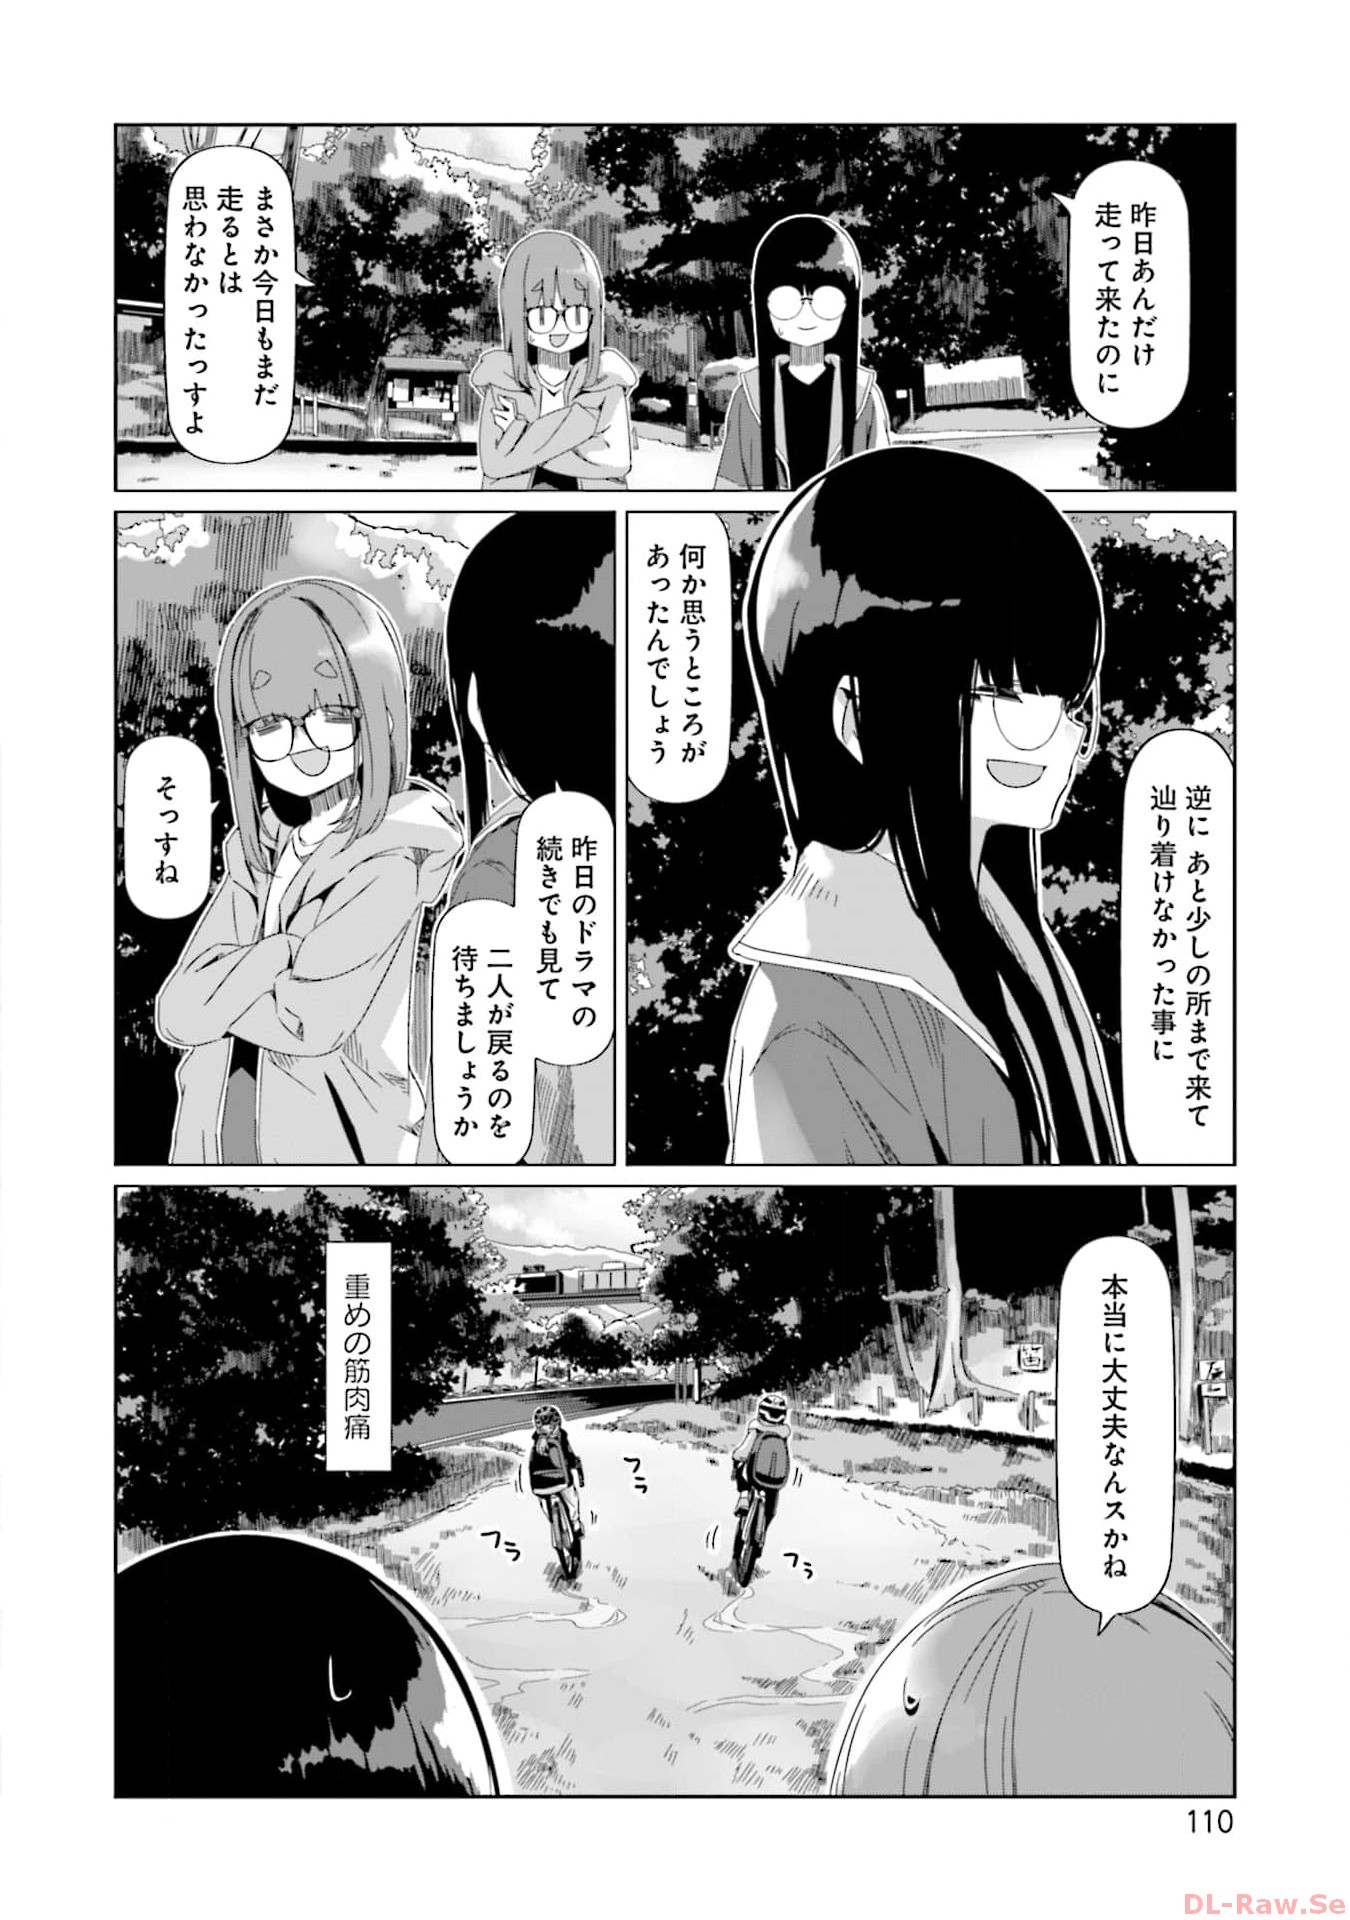 Yuru Camp - Chapter 86 - Page 2